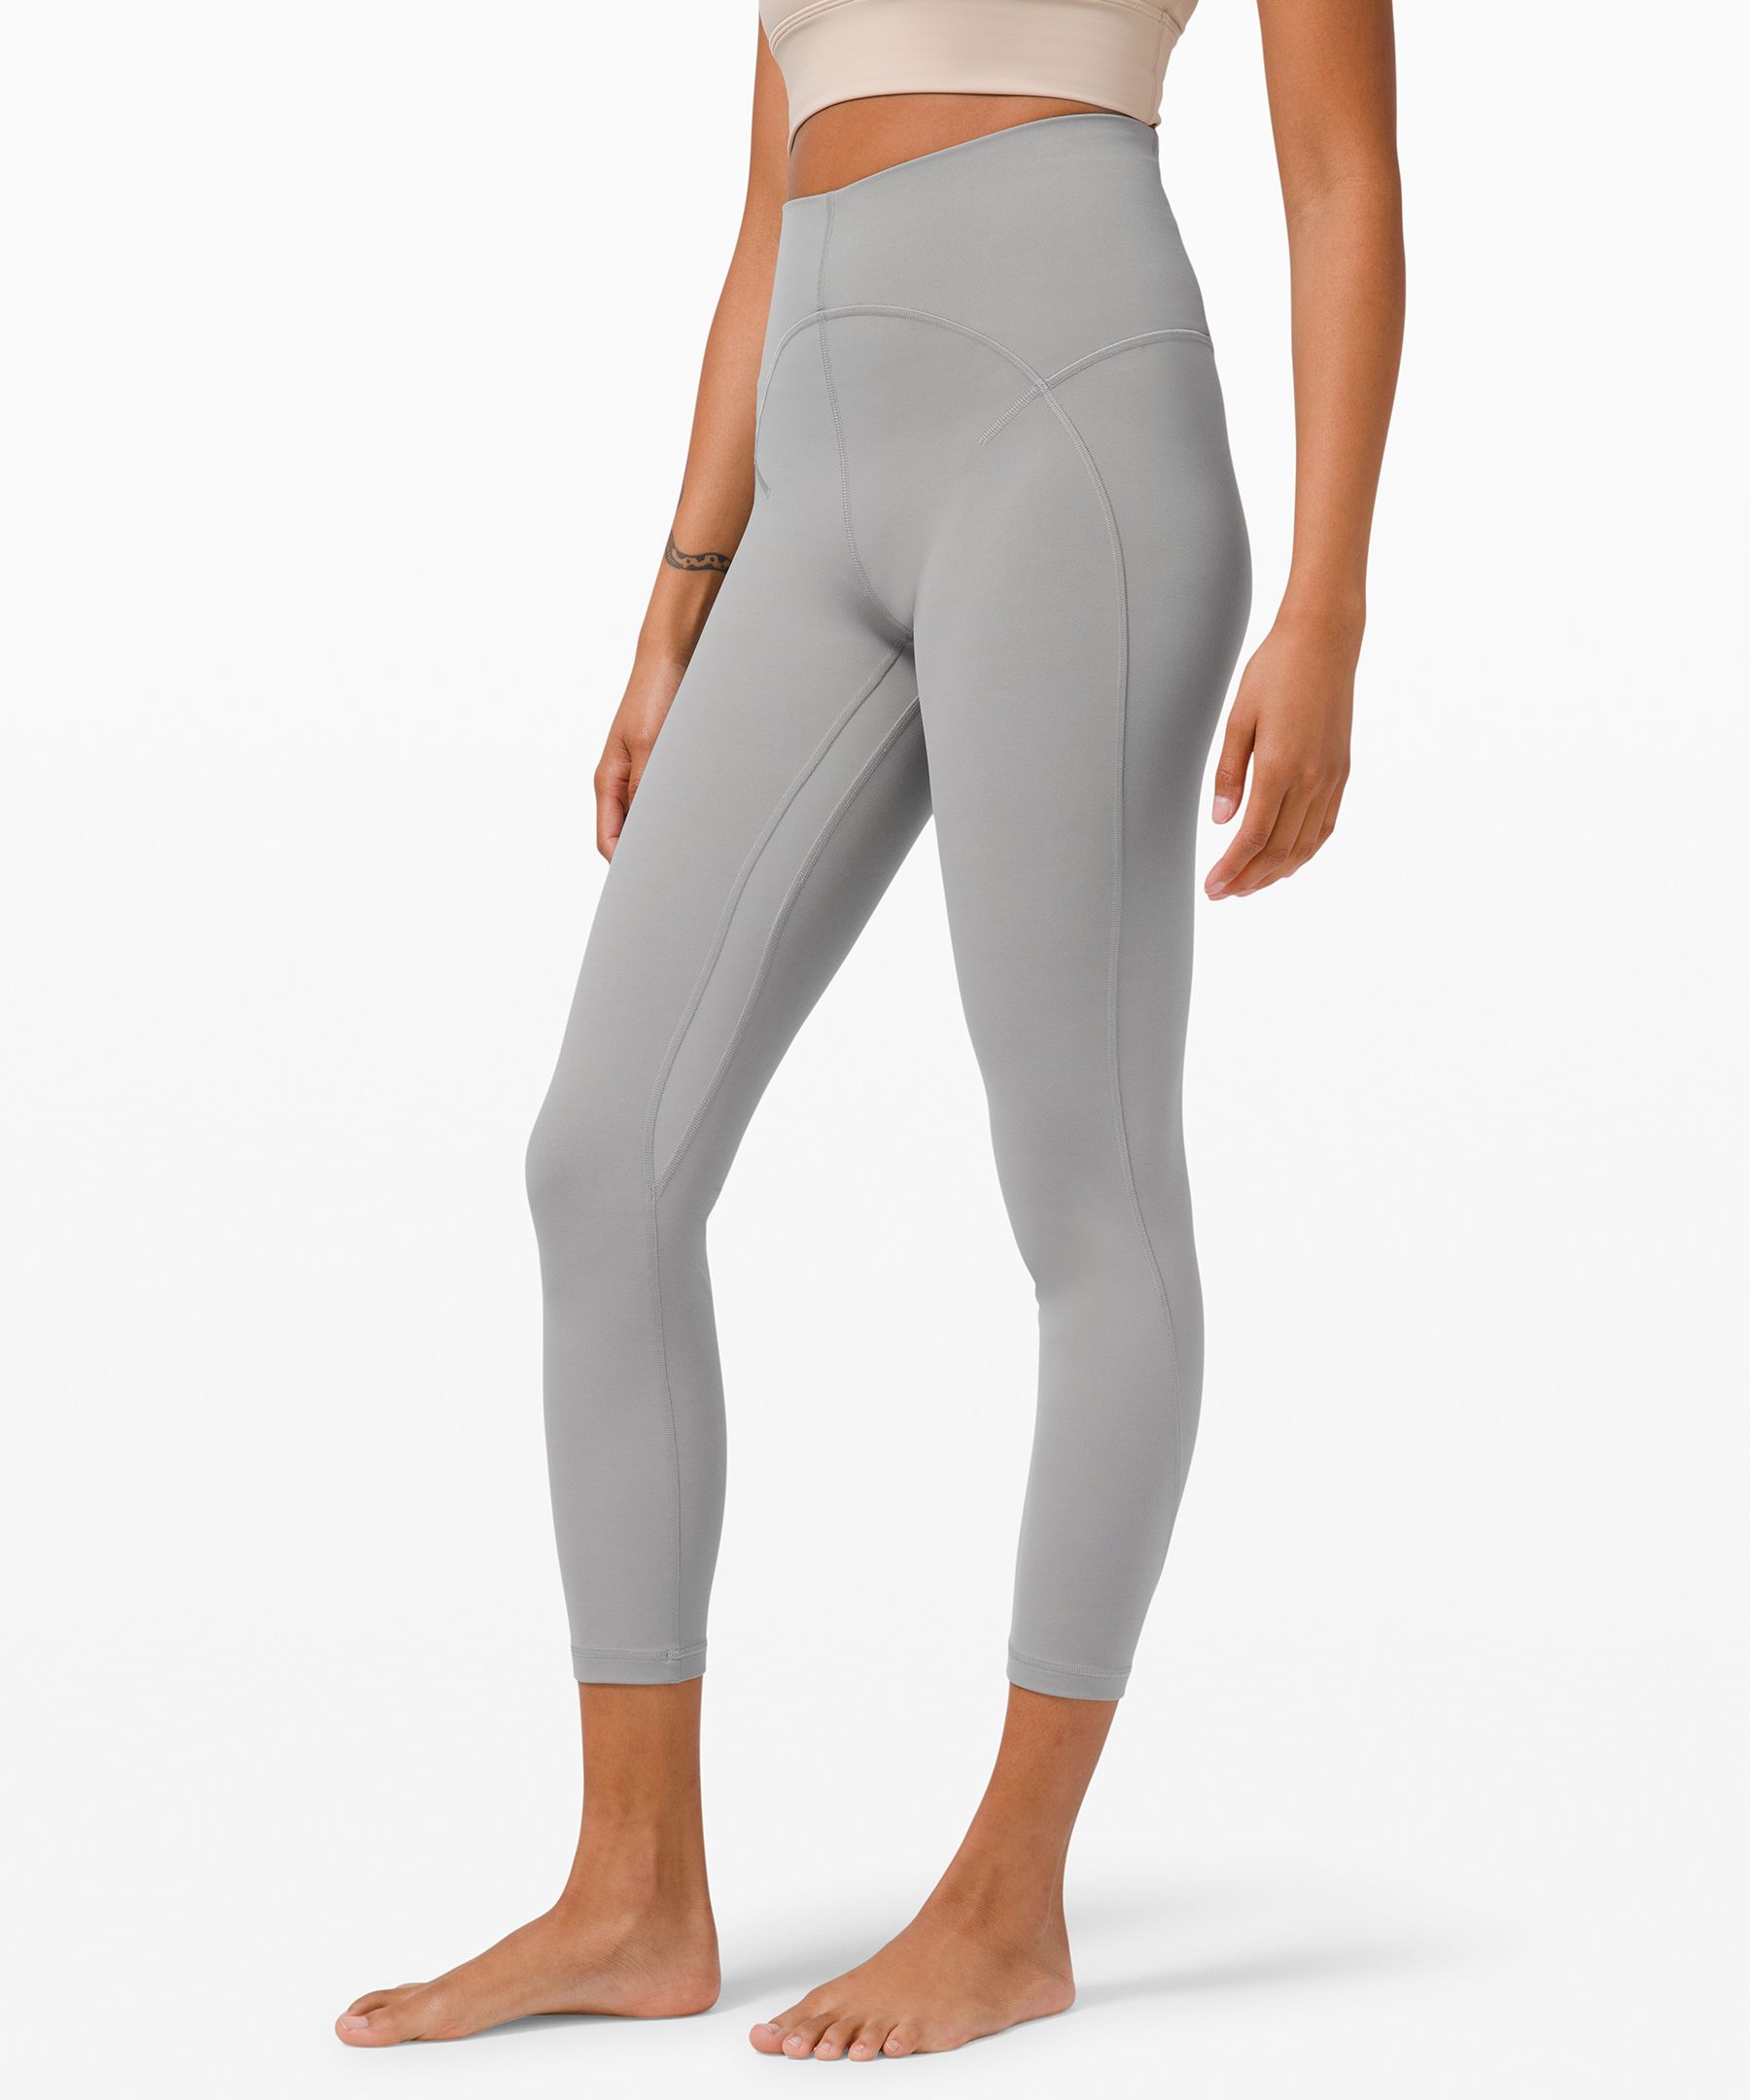 grey lululemon leggings